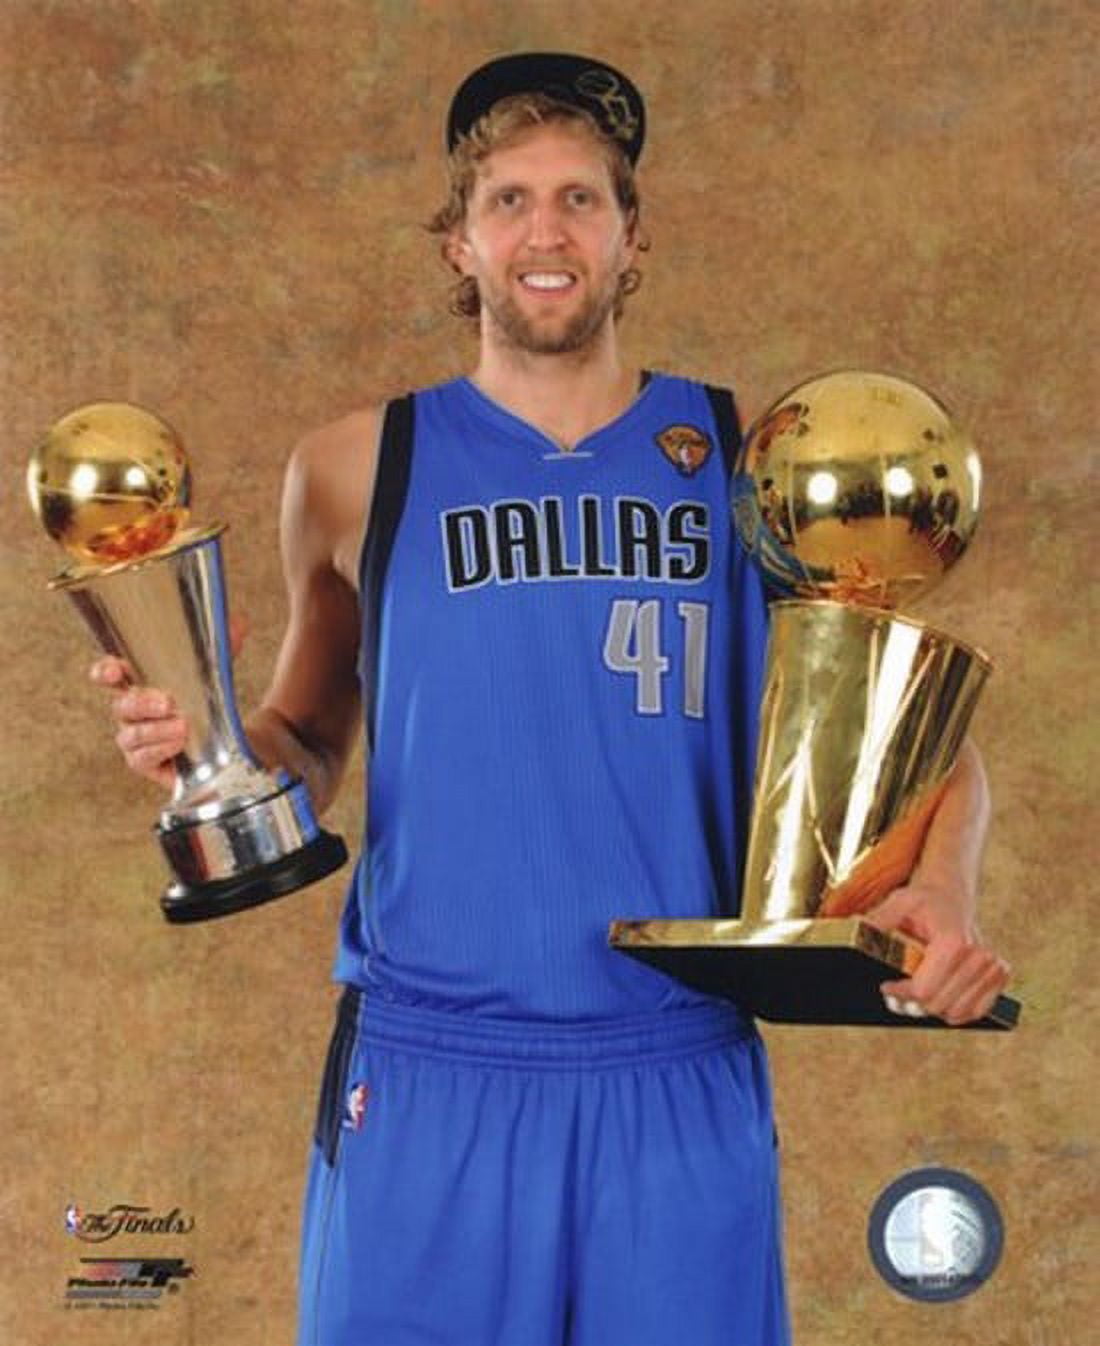 Authentic 2011 NBA Finals Dirk Nowitzki jersey with championship